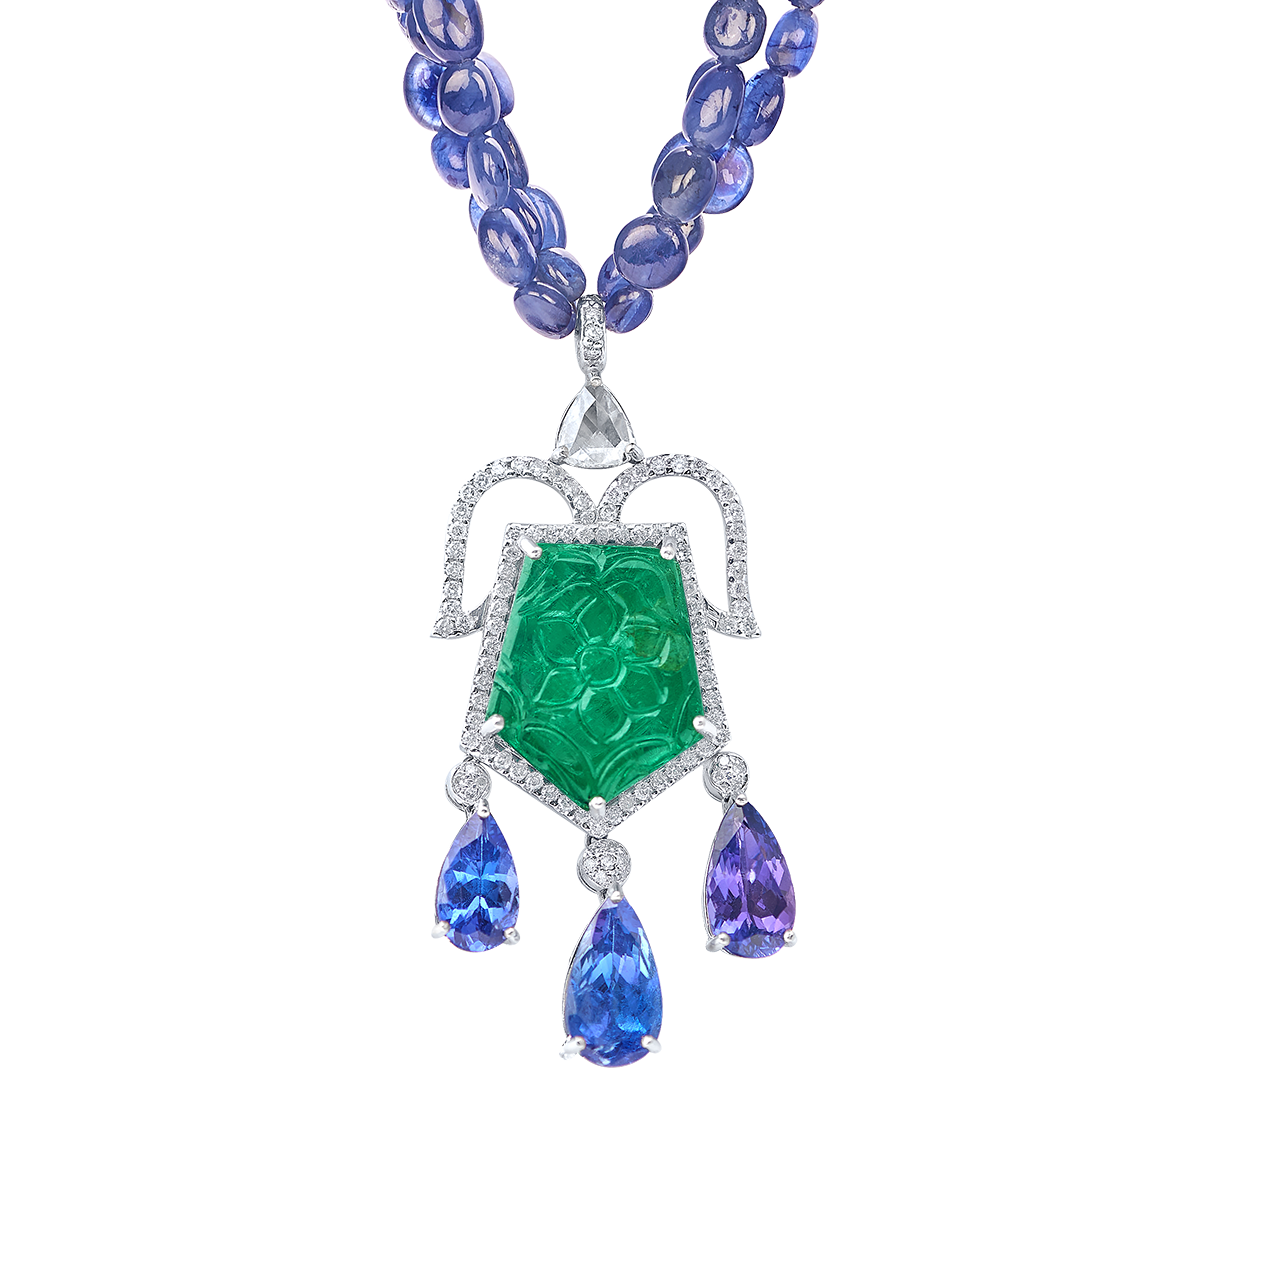 27.48克拉 祖母綠鑽墜項鍊
Carved Emerald and Diamond Pendant Necklace